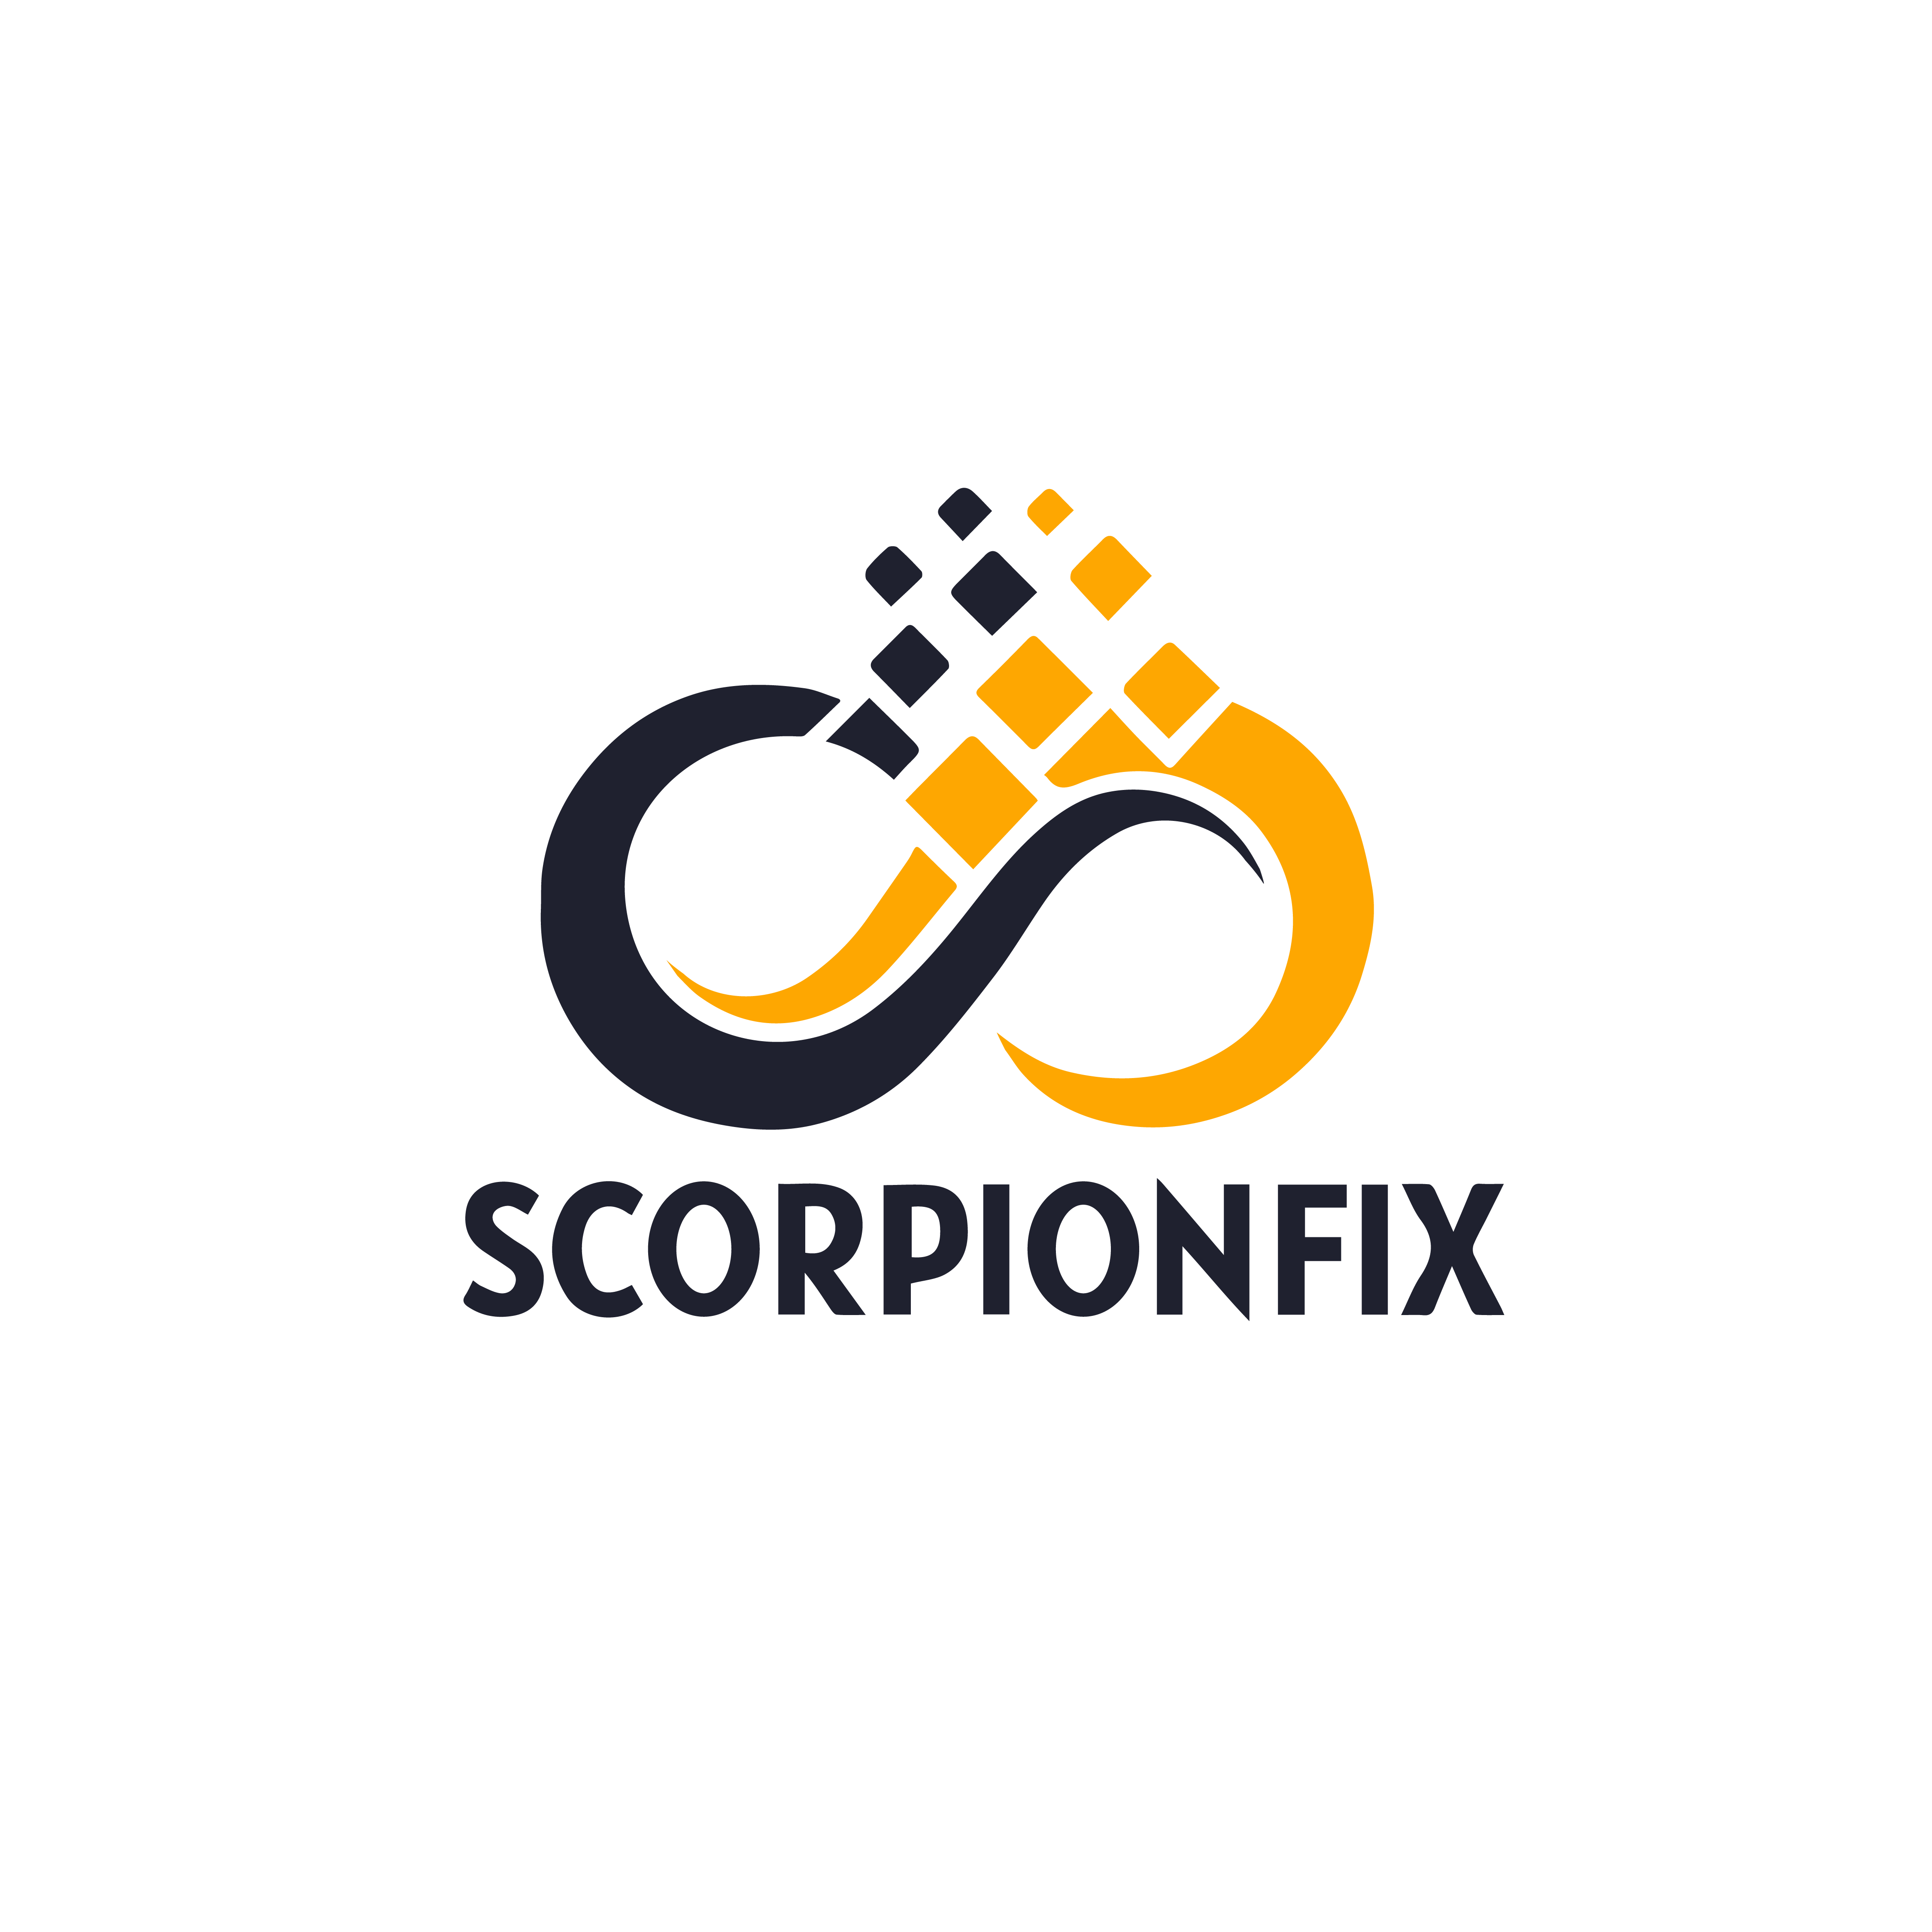 Scorpionfix